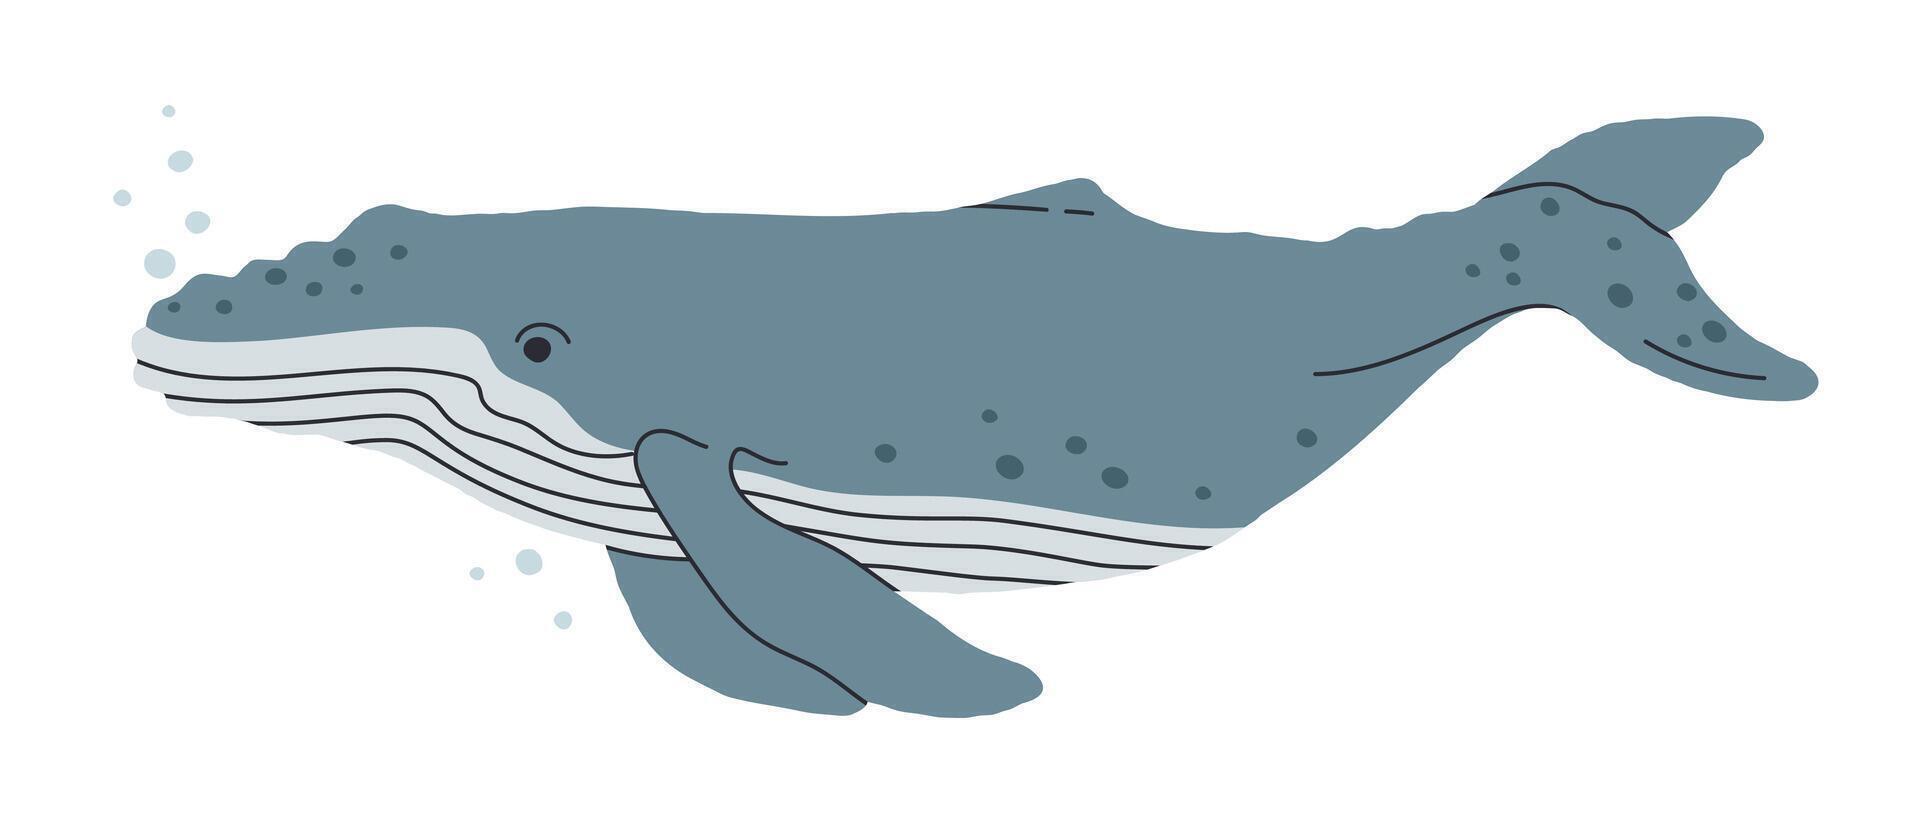 azul ballena. mano dibujado submarino mamífero animal, salvaje ballena, acuático gigantesco criatura nadar en Oceano plano ilustración. linda azul ballena en blanco vector